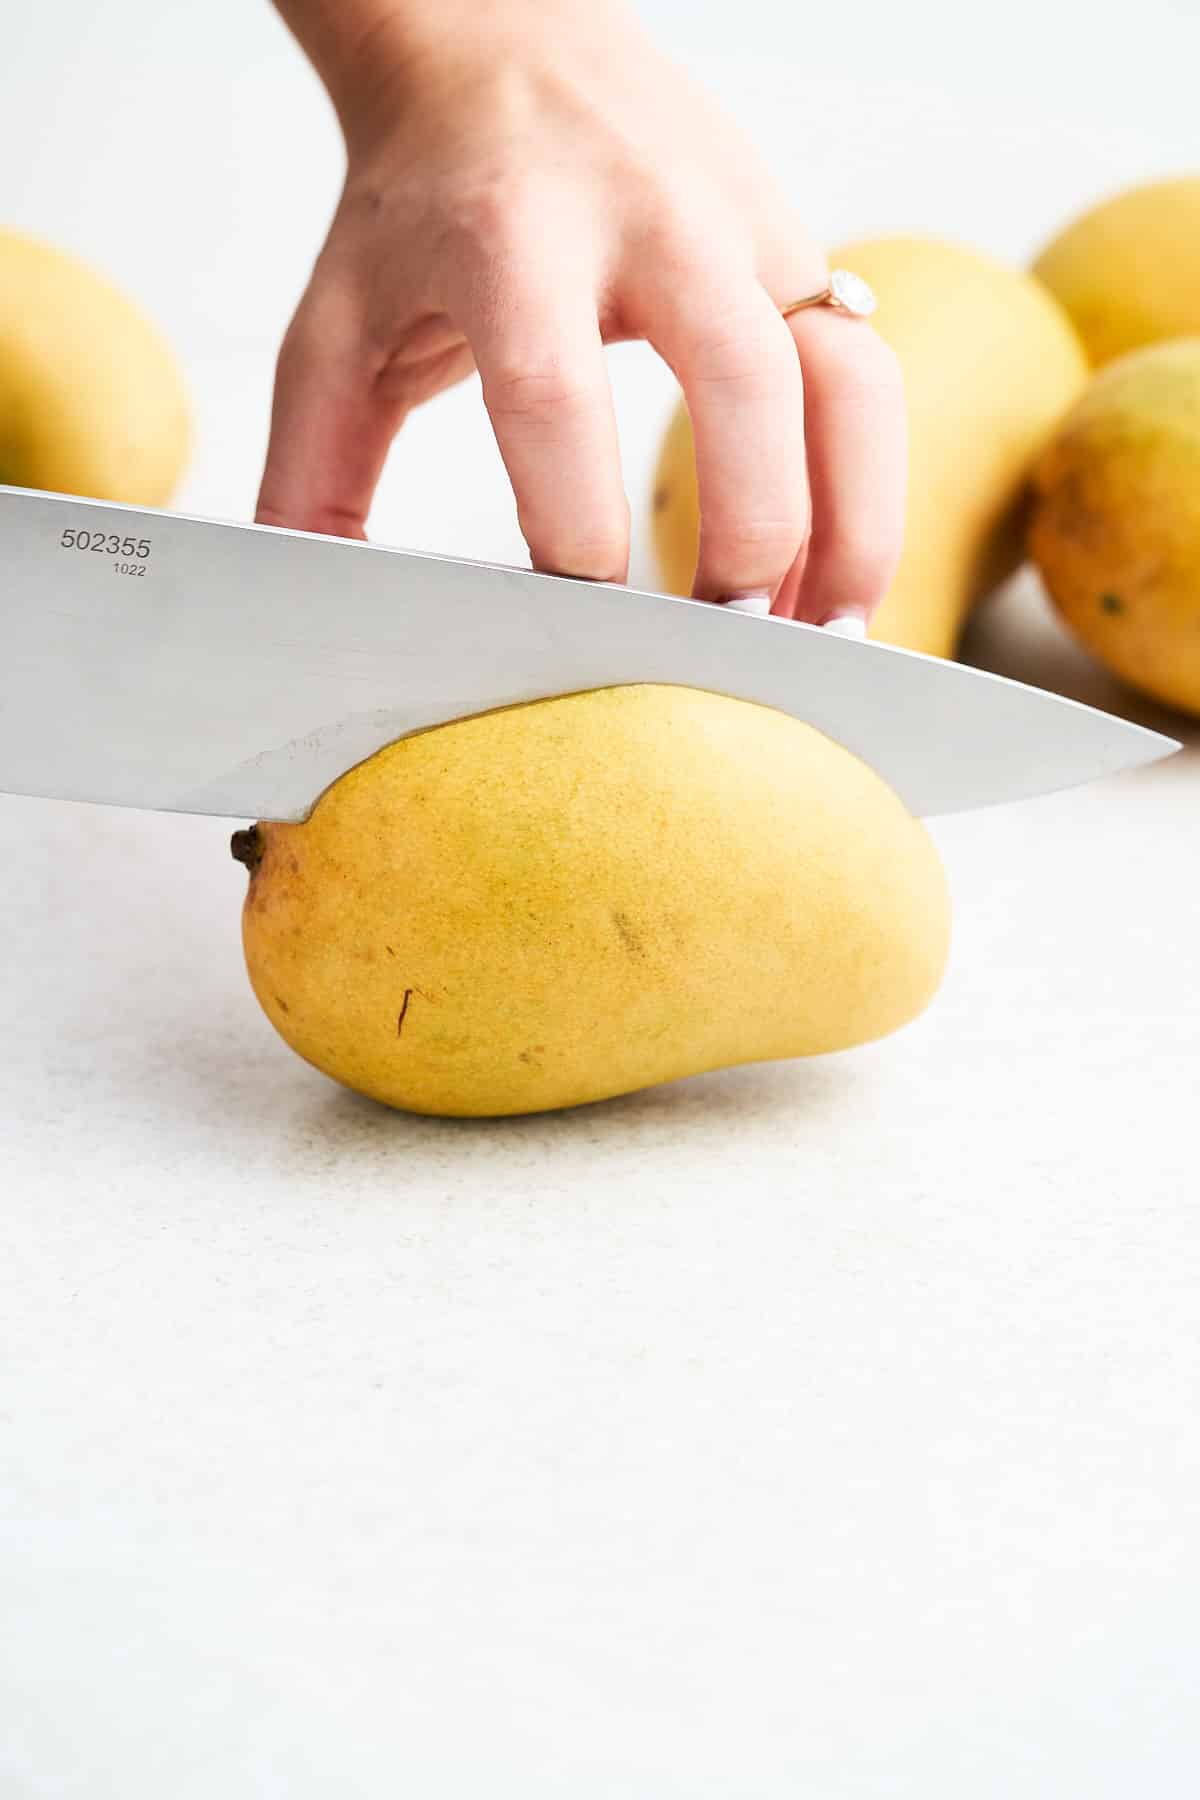 Cutting a mango on its side.